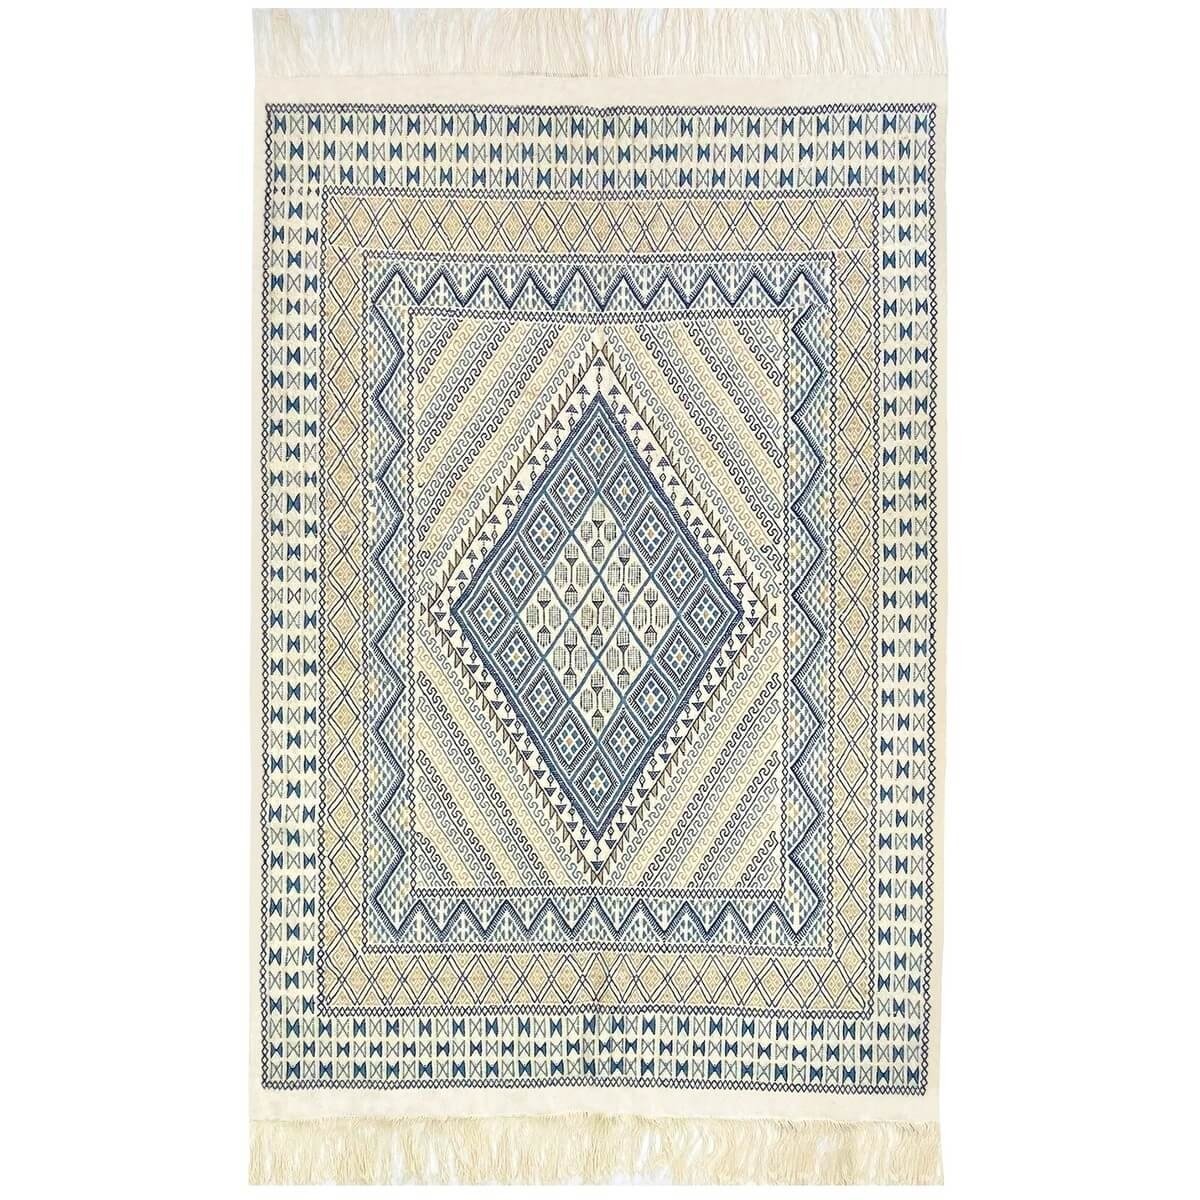 Berber carpet Large Rug Margoum Flouki 206x308 cm Blue/White (Handmade, Wool, Tunisia) Tunisian margoum rug from the city of Kai